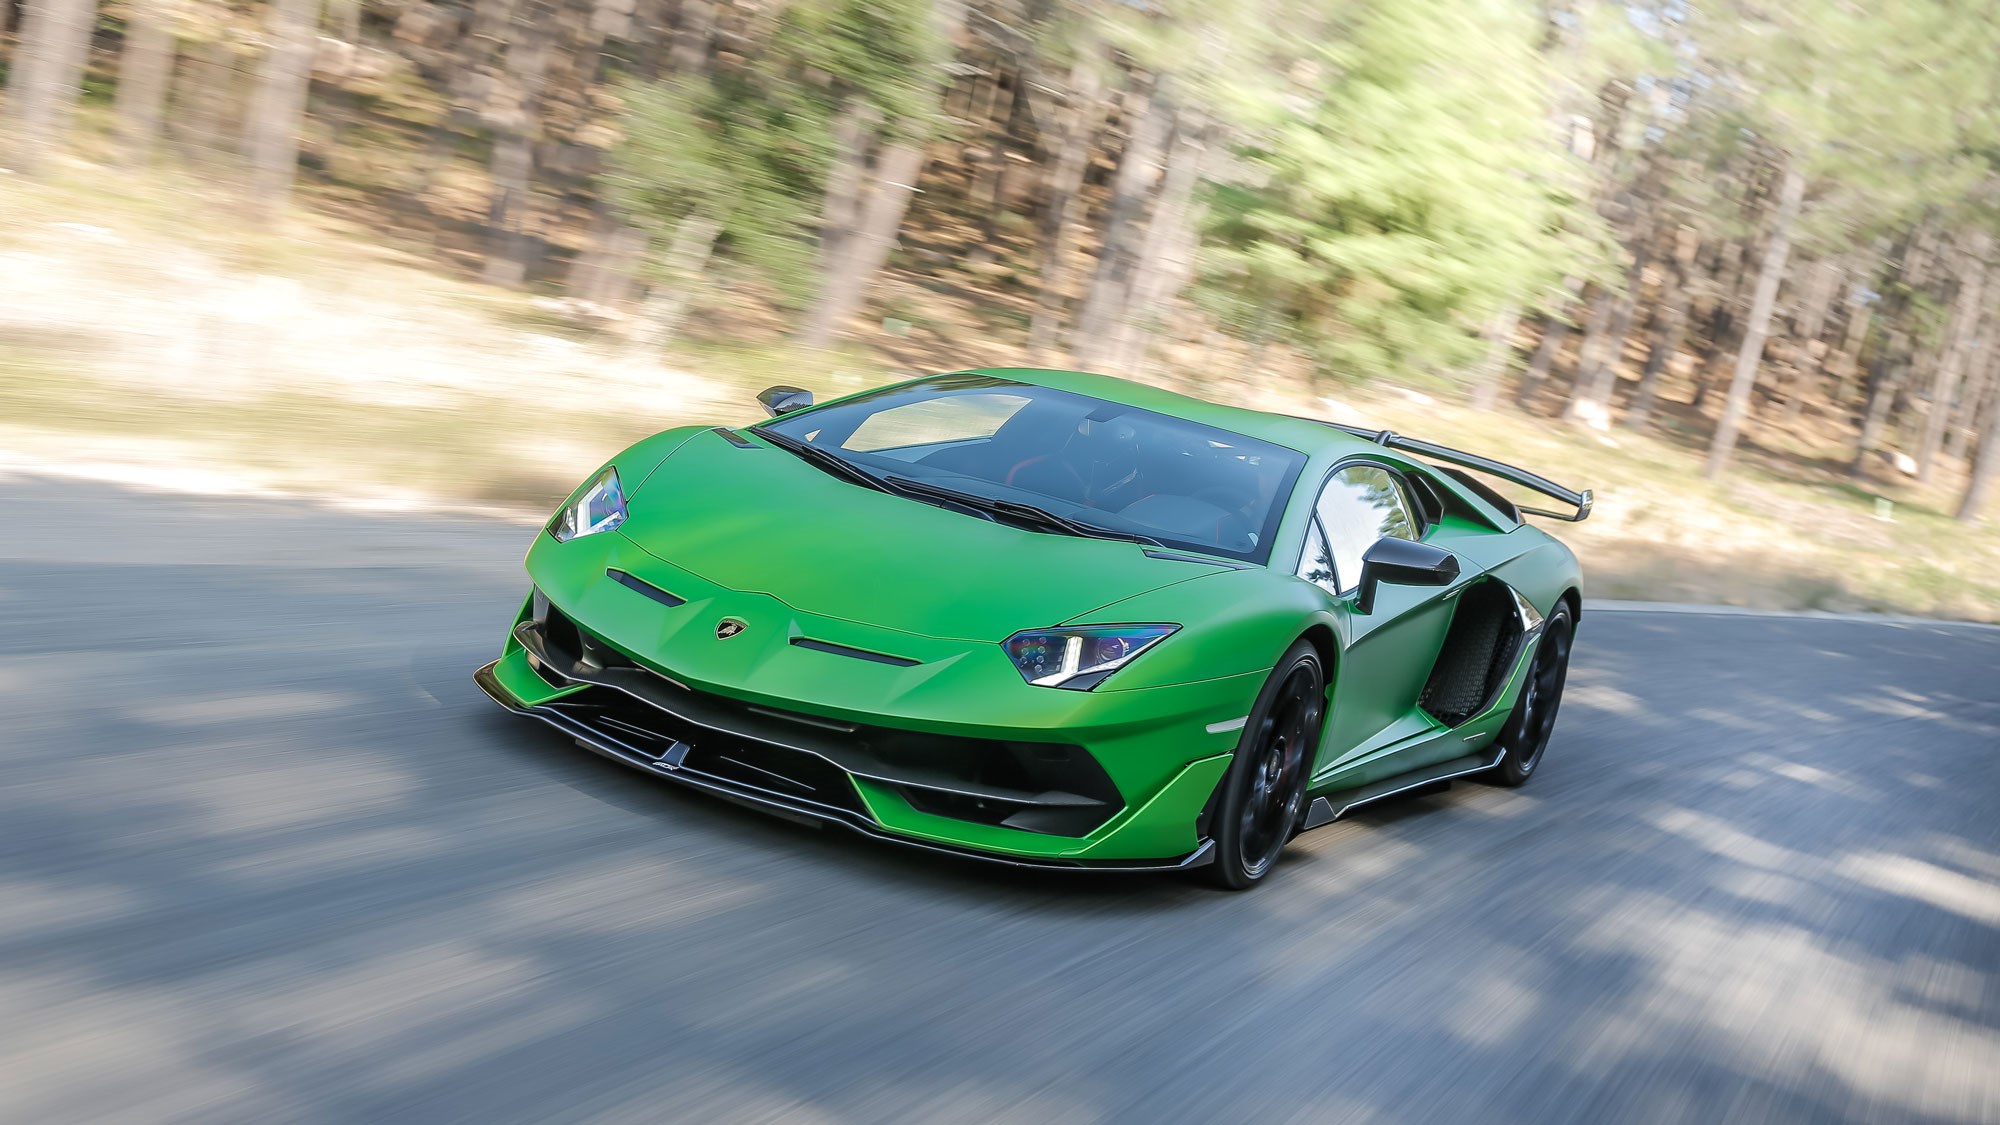 Lamborghini Aventador SVJ review: truly special | CAR Magazine